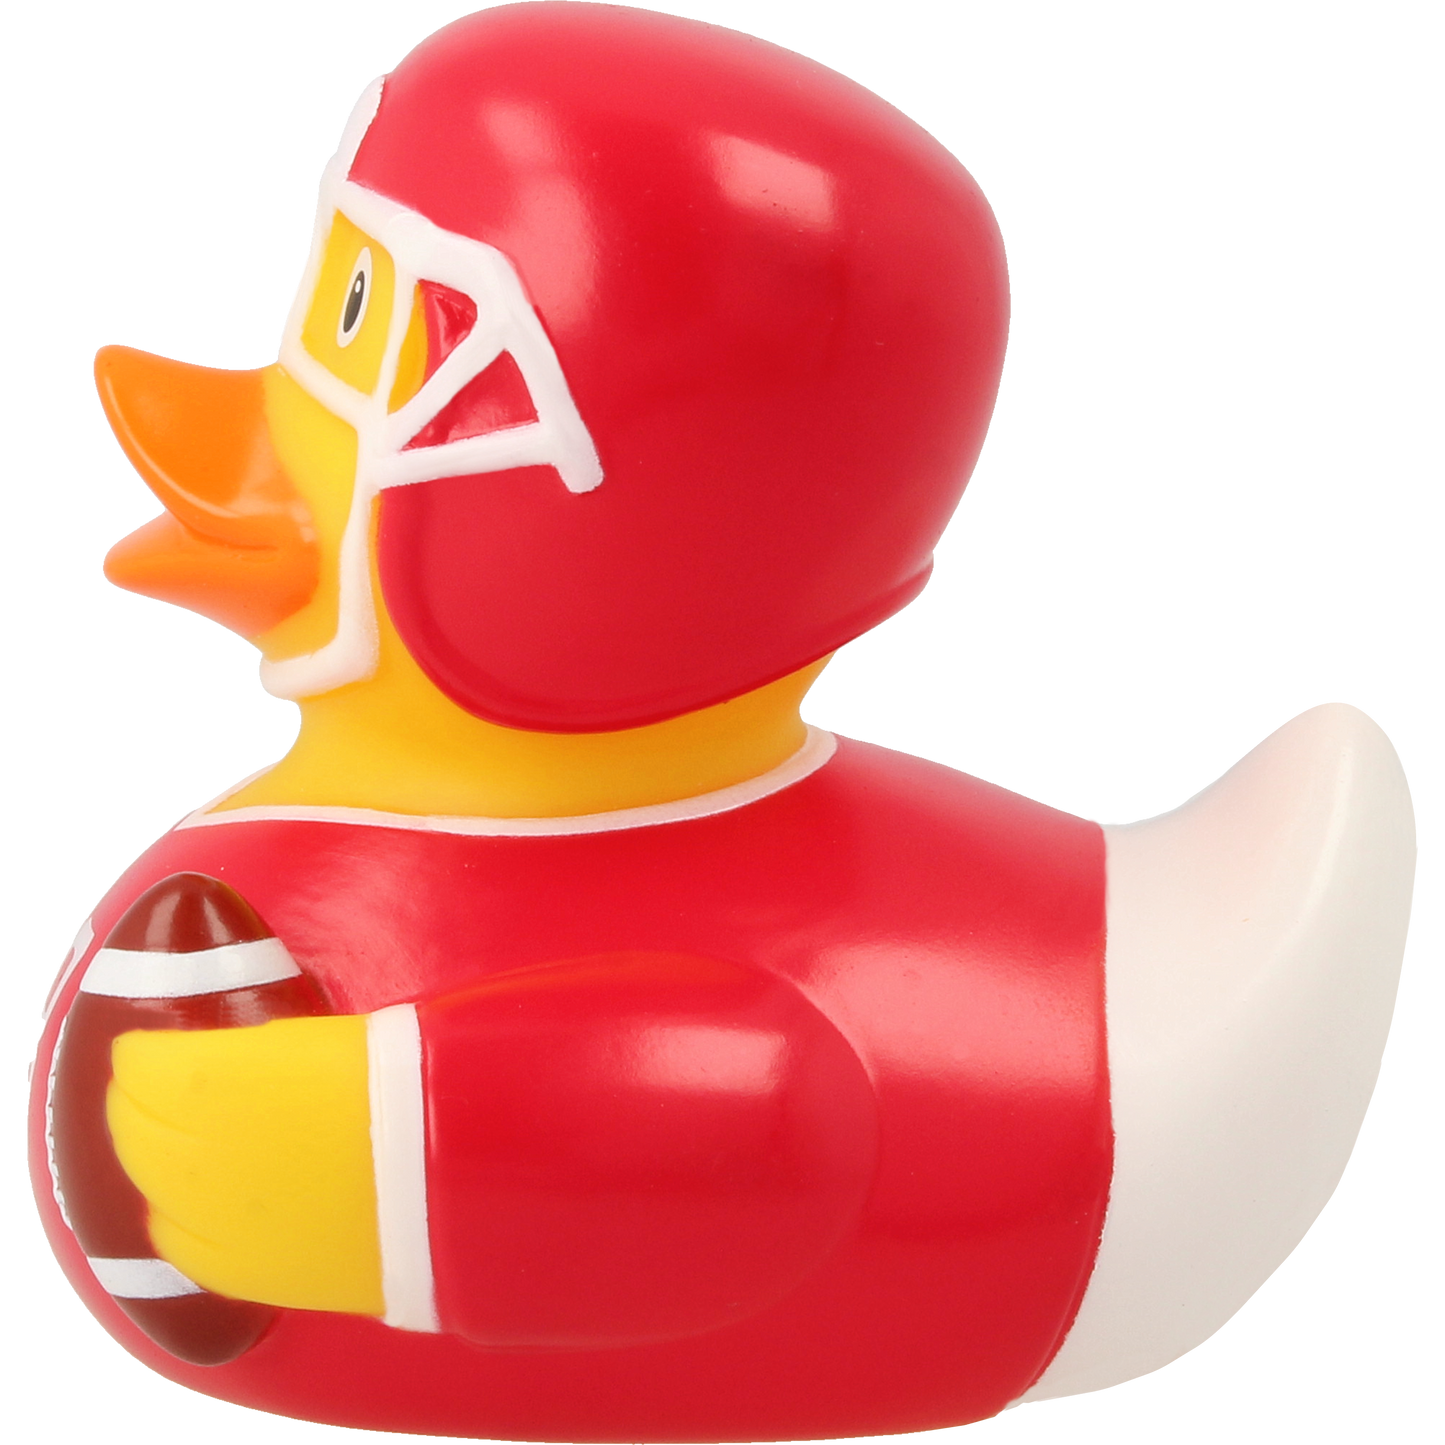 American football duck